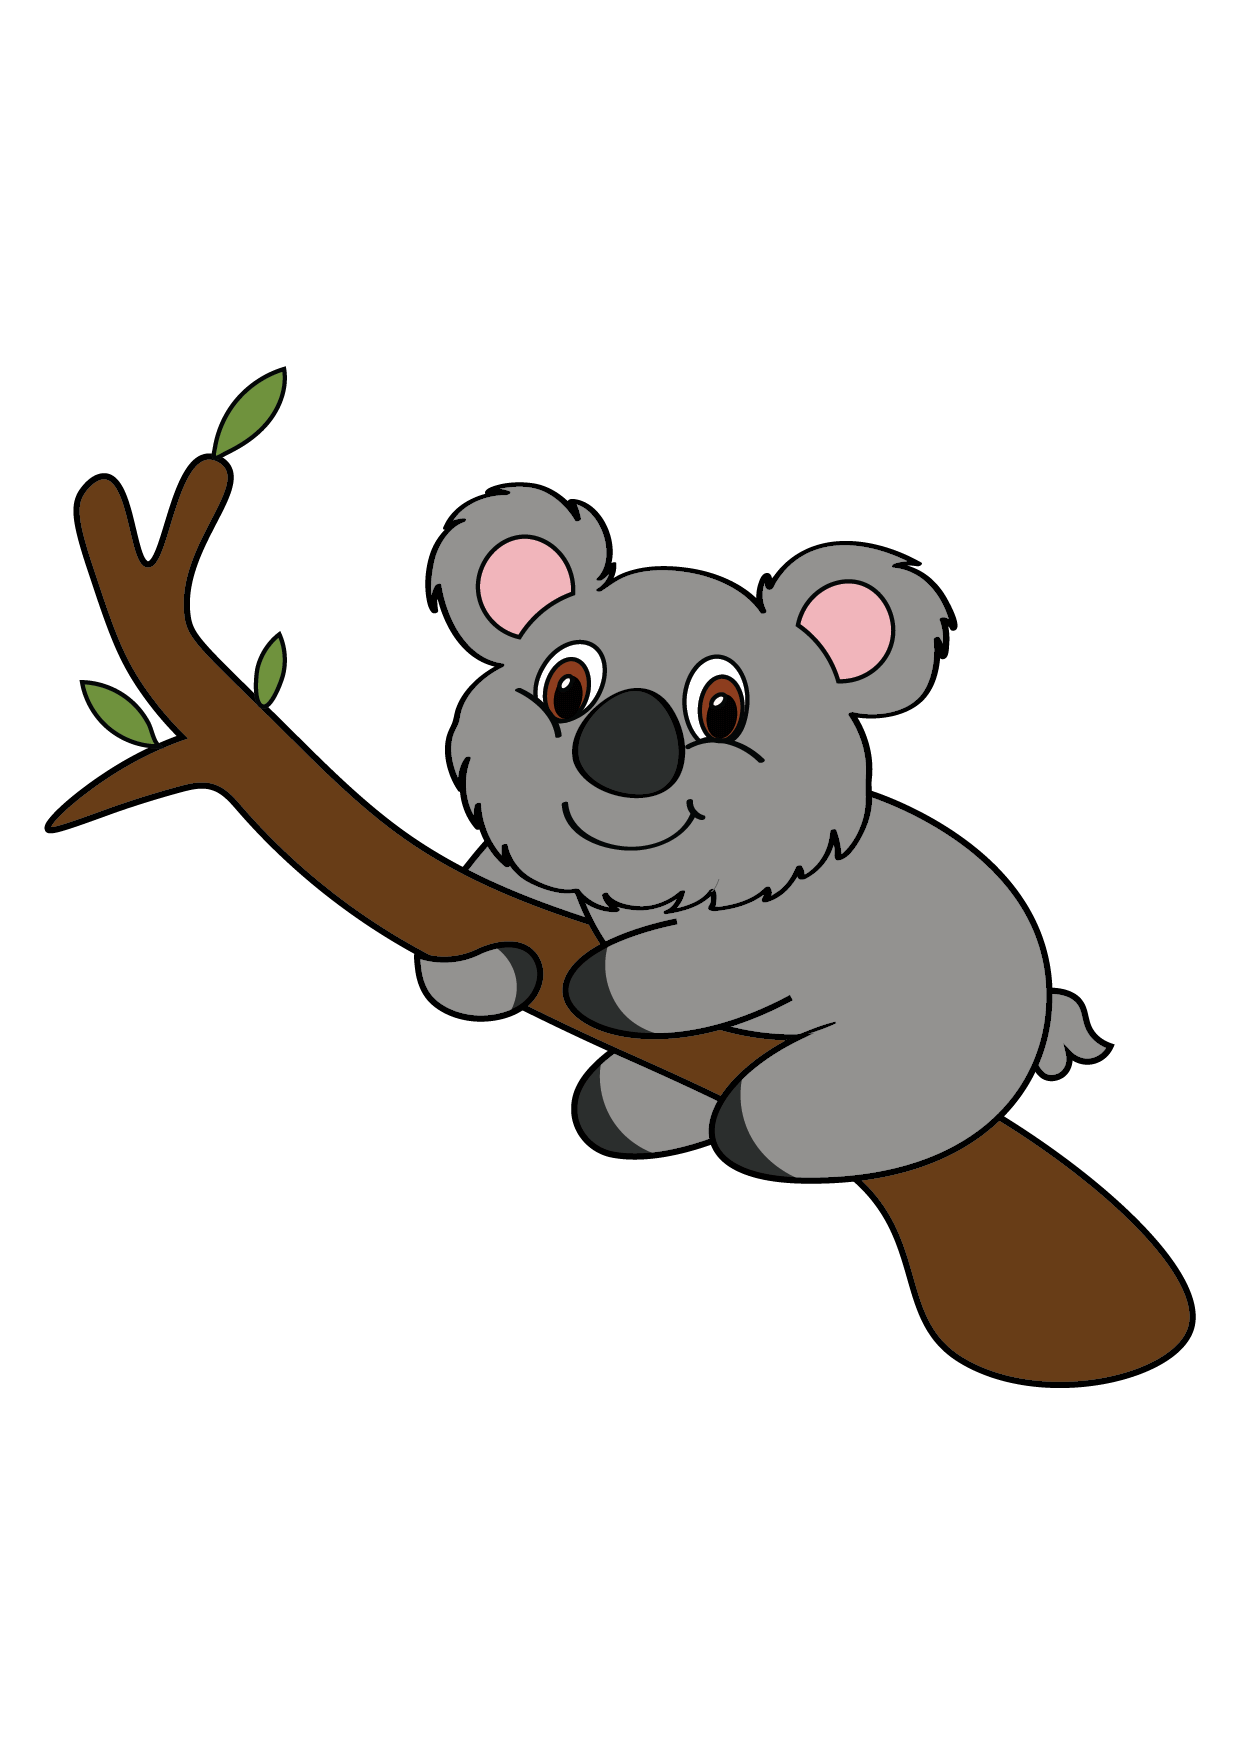 How to Draw A Koala Step by Step Printable